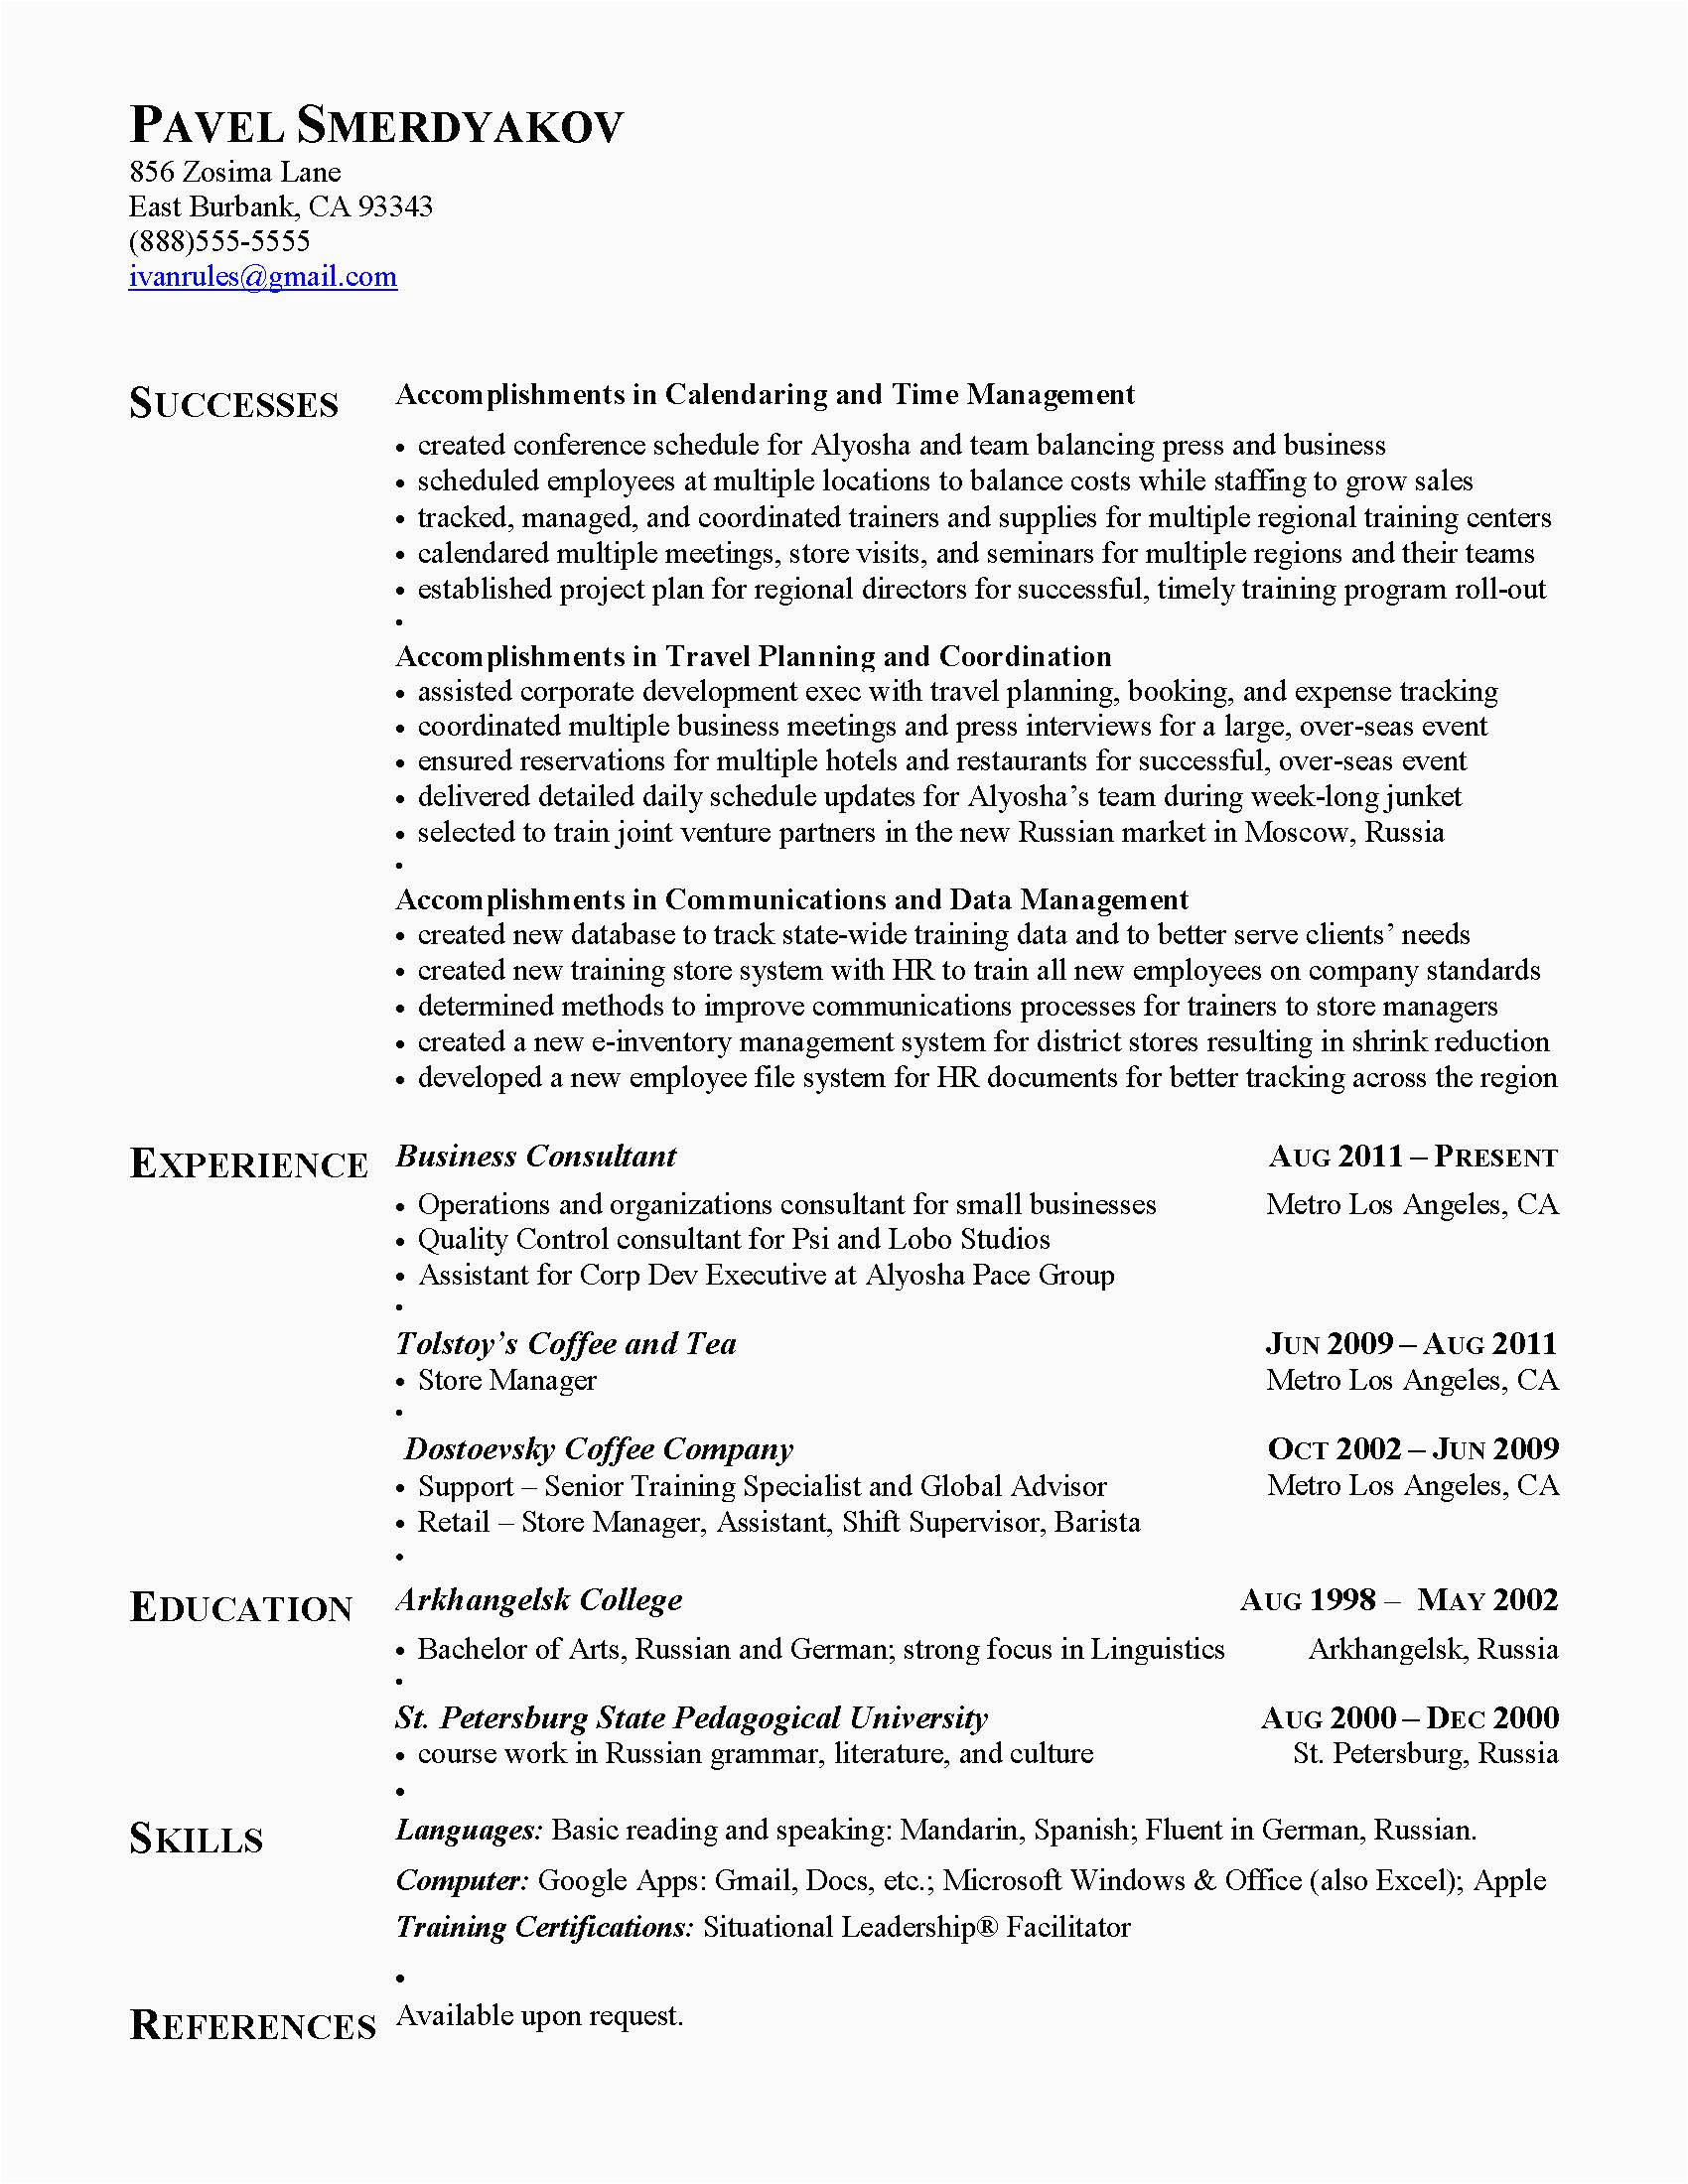 Sample Resume with A Section On Accomplishments Ac Plishment Resume Sample – Salescvfo